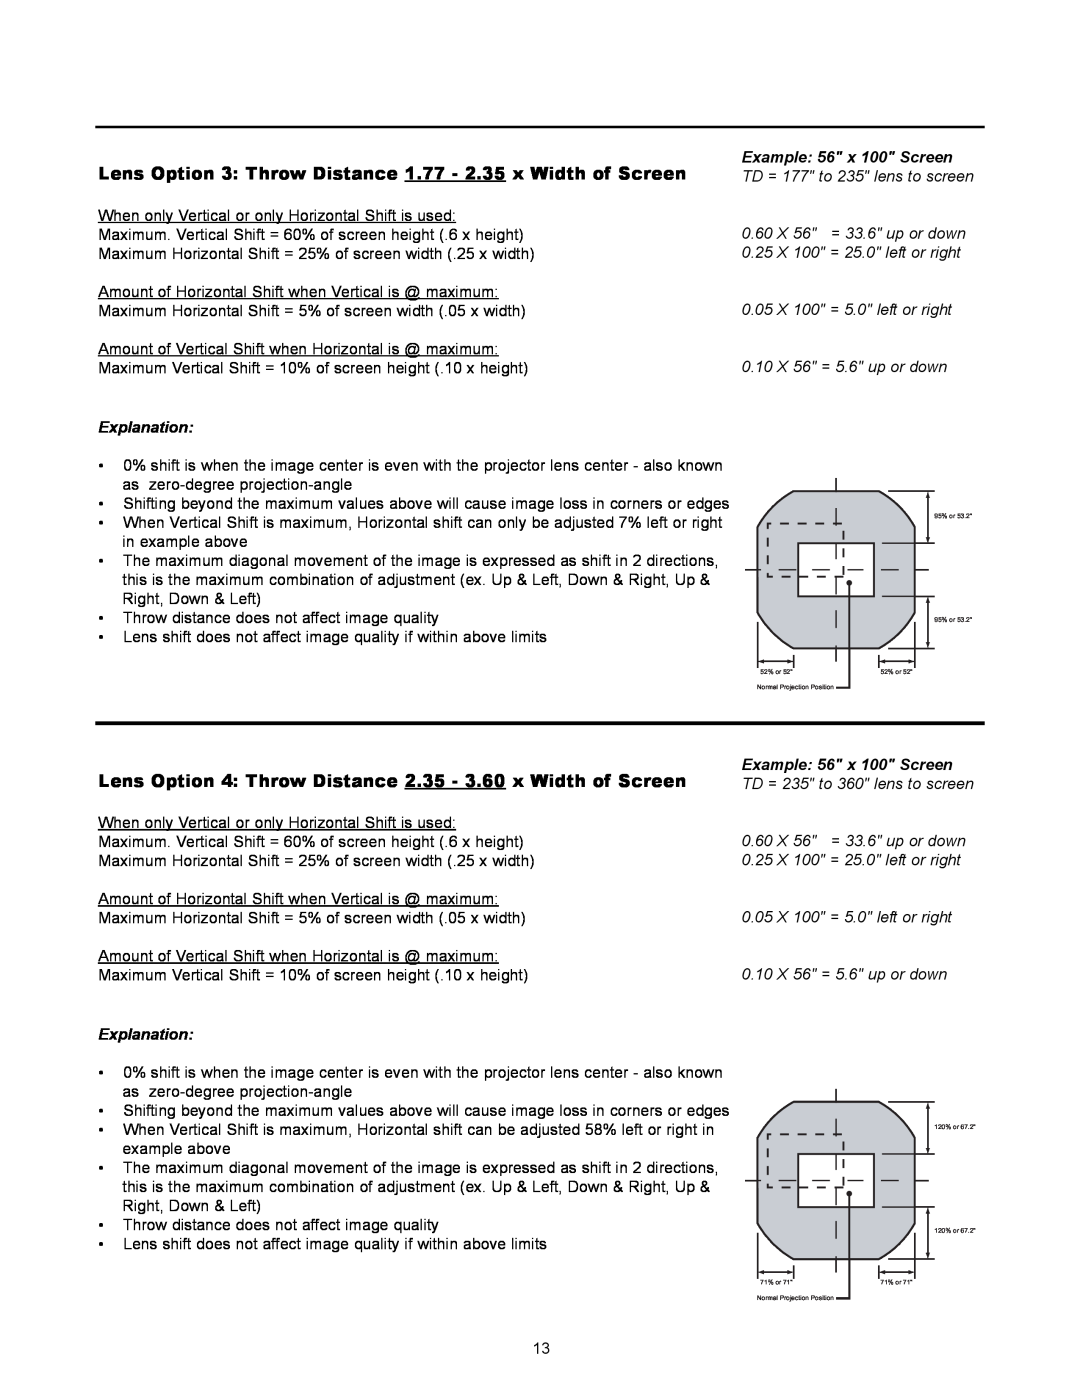 Runco VX-4000ci manual Lens Option 3 Throw Distance 1.77 - 2.35 x Width of Screen, Explanation 